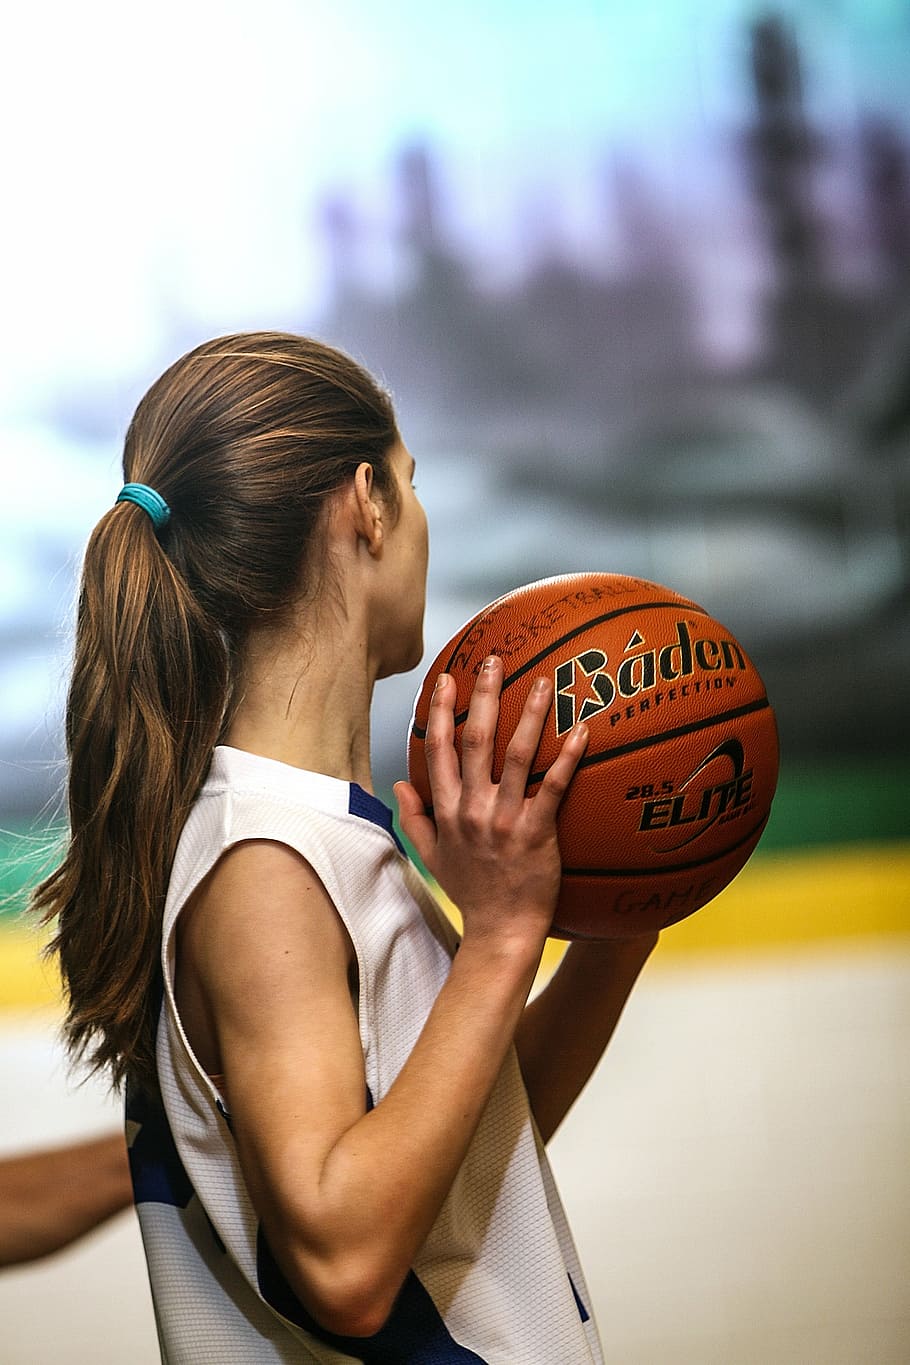 HD wallpaper: woman holding basketball, girls basketball, female